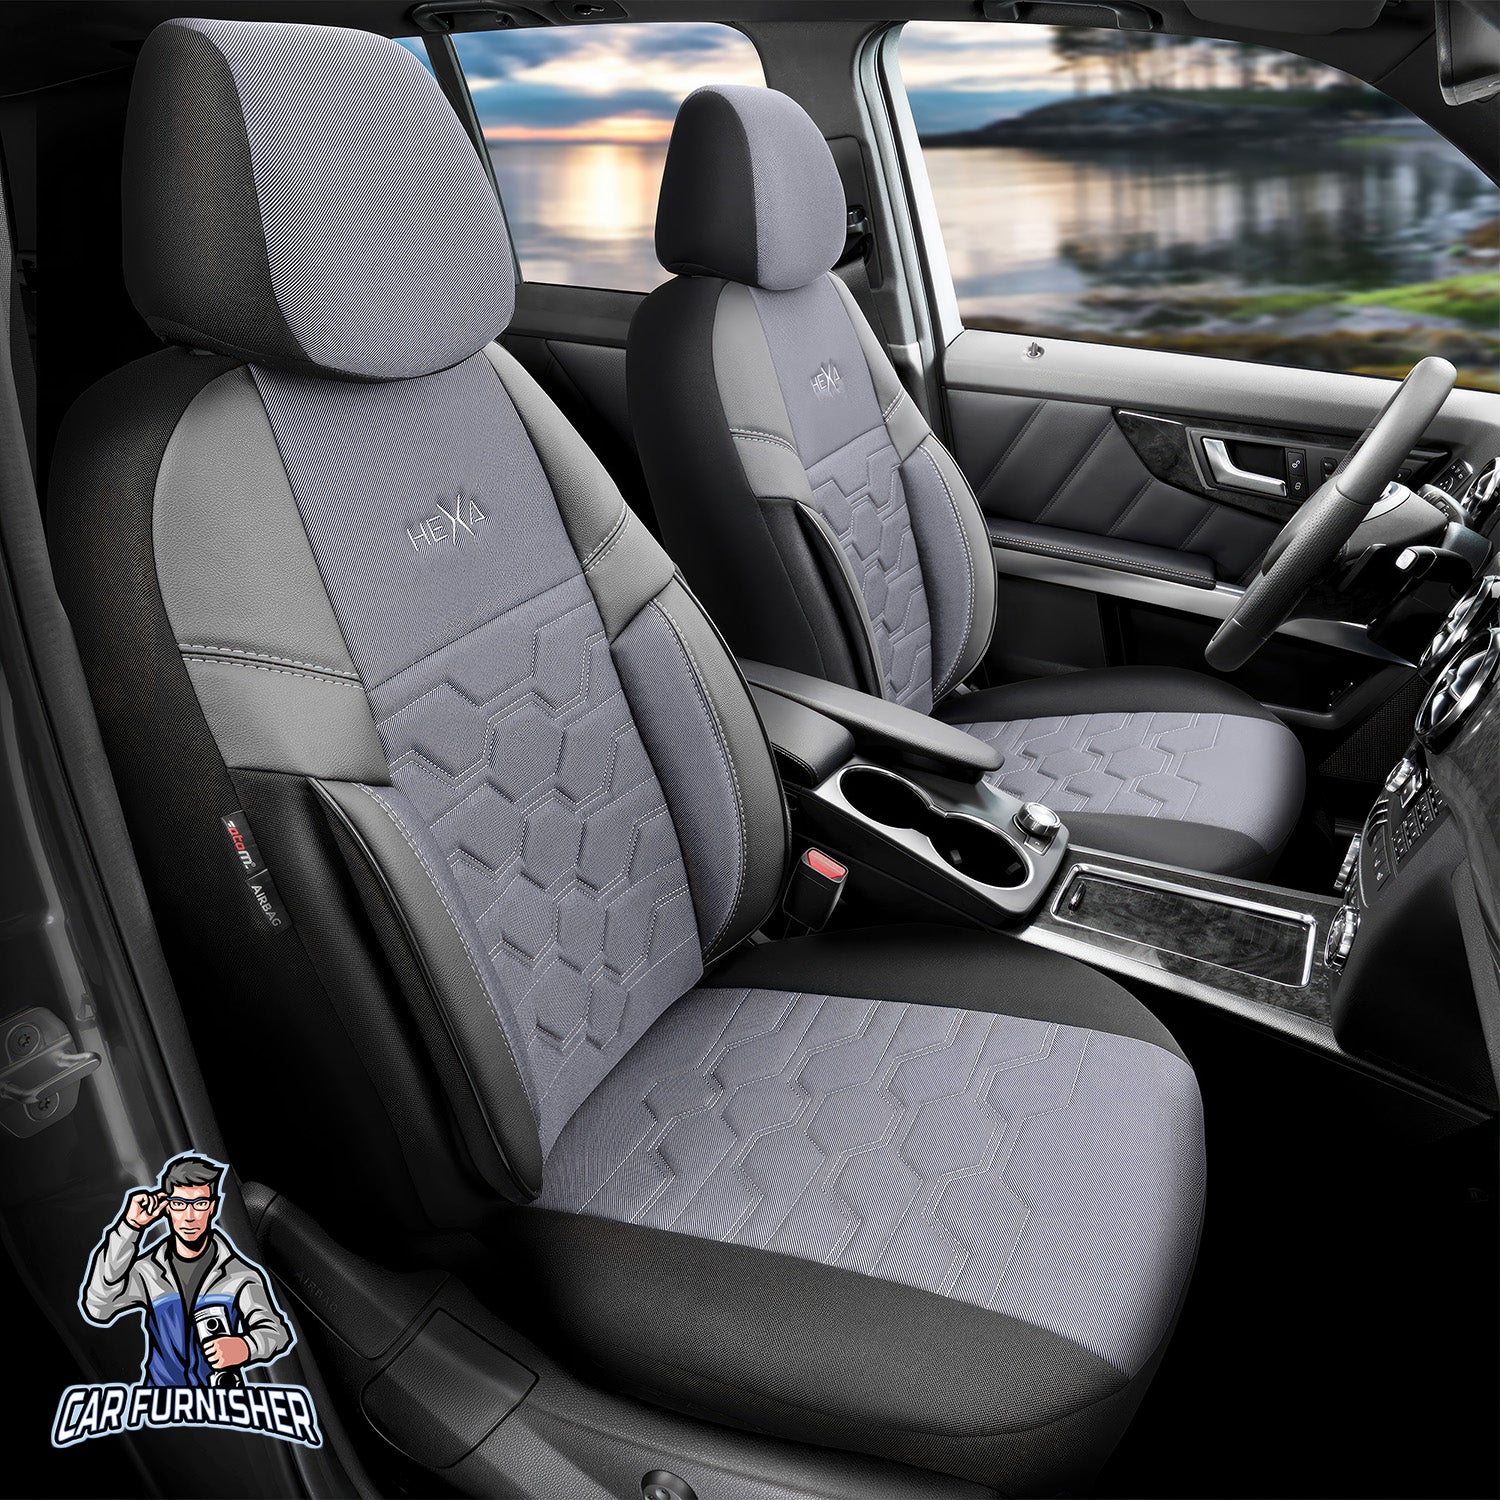 Car Seat Cover Set - Hexa Design Gray 5 Seats + Headrests (Full Set) Leather & Jacquard Fabric